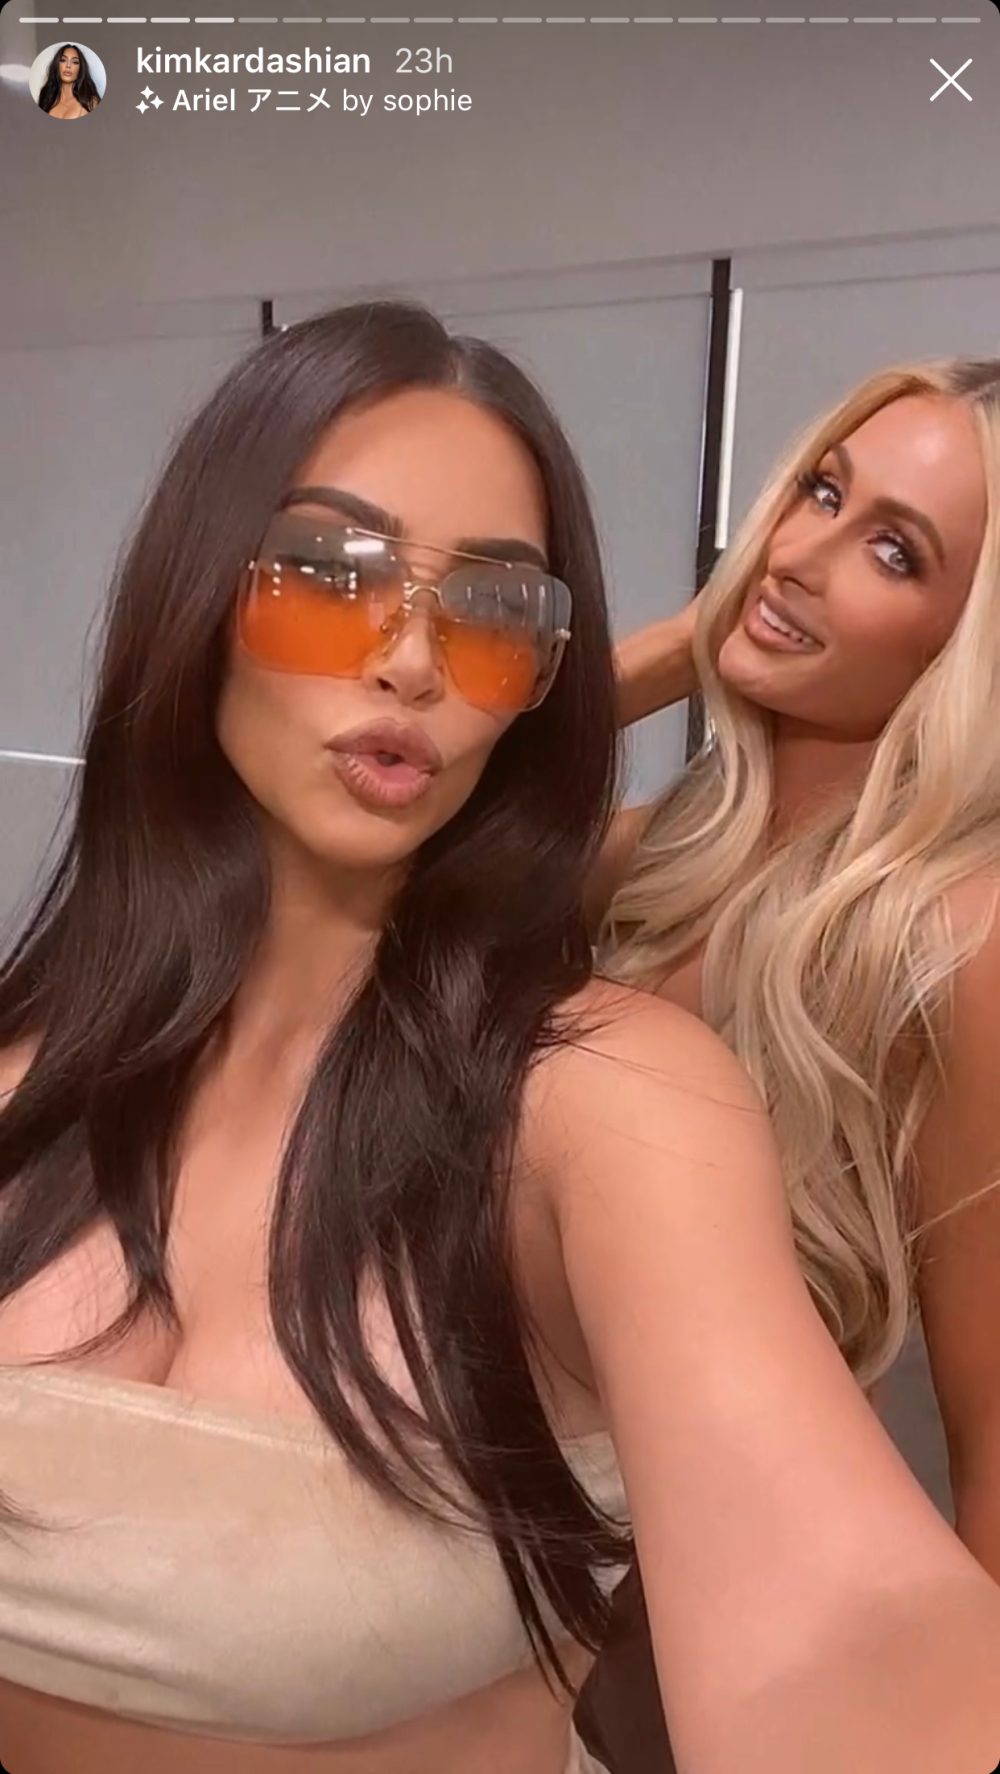 Relive Kim Kardashian and Paris Hilton's Decades-Long Friendship